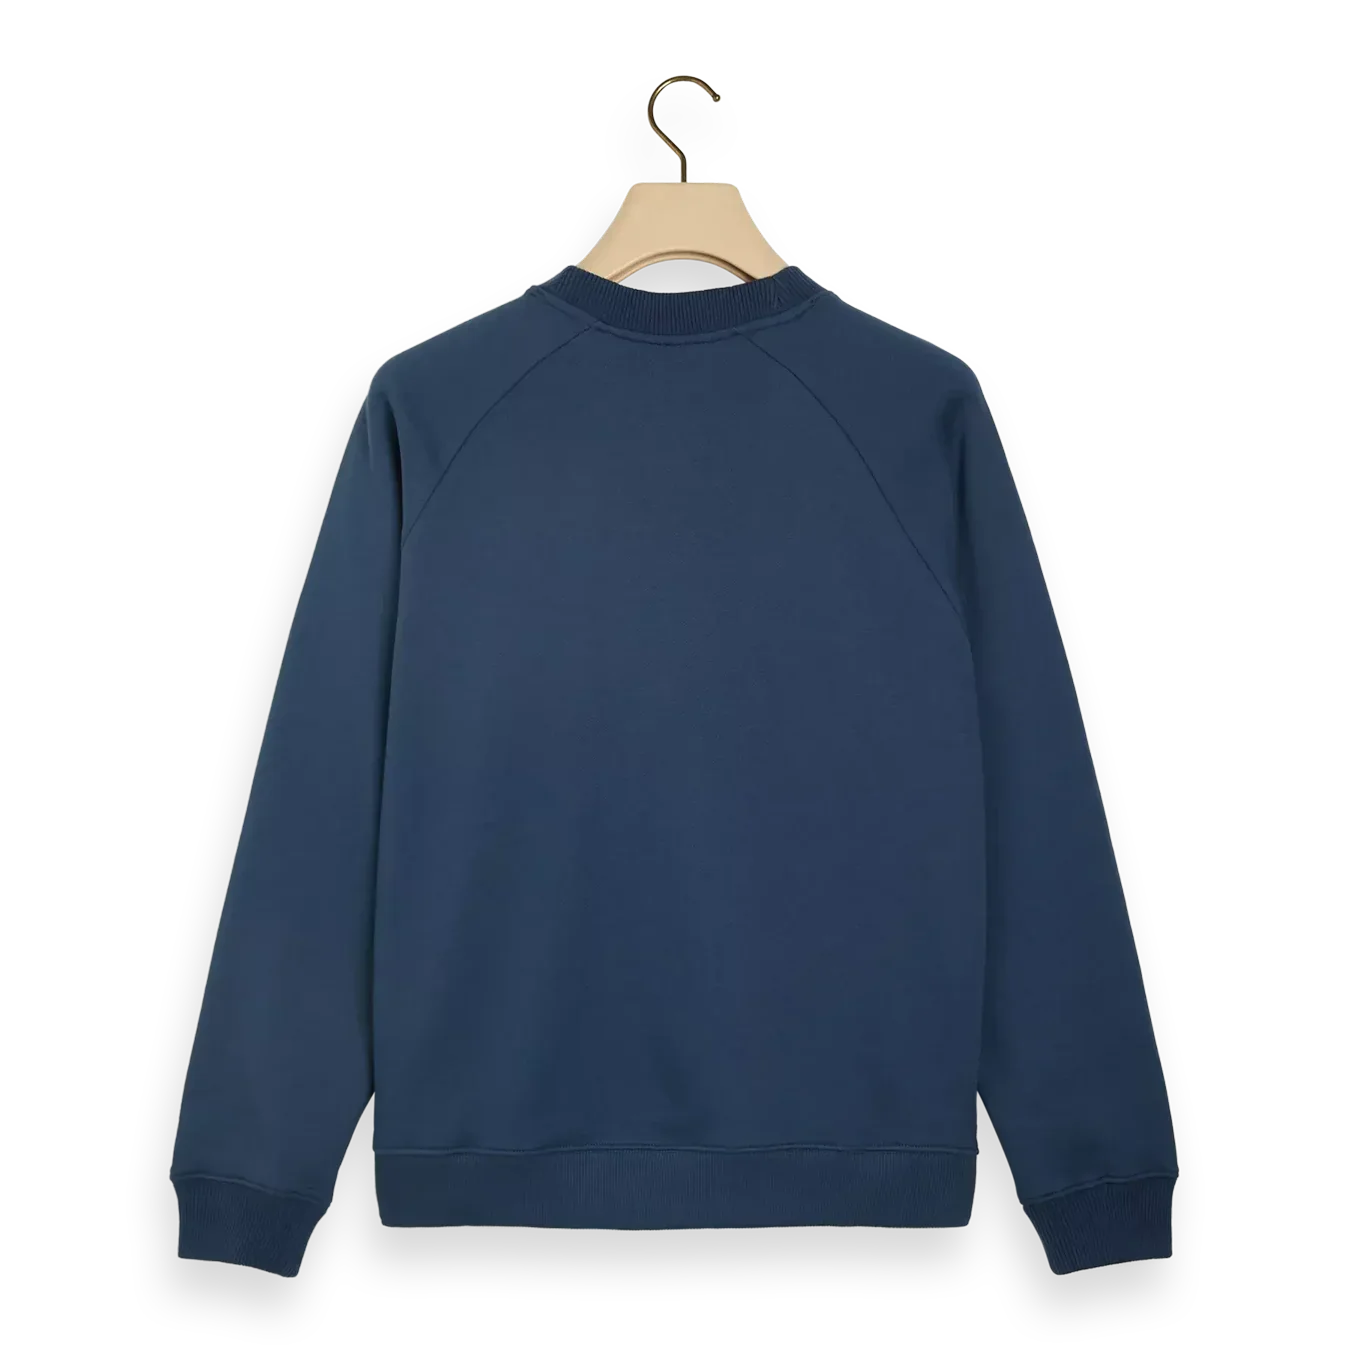 'Scotch & Soda Unisex Organic Cotton Crewneck Sweater' in 'Storm Blue' colour